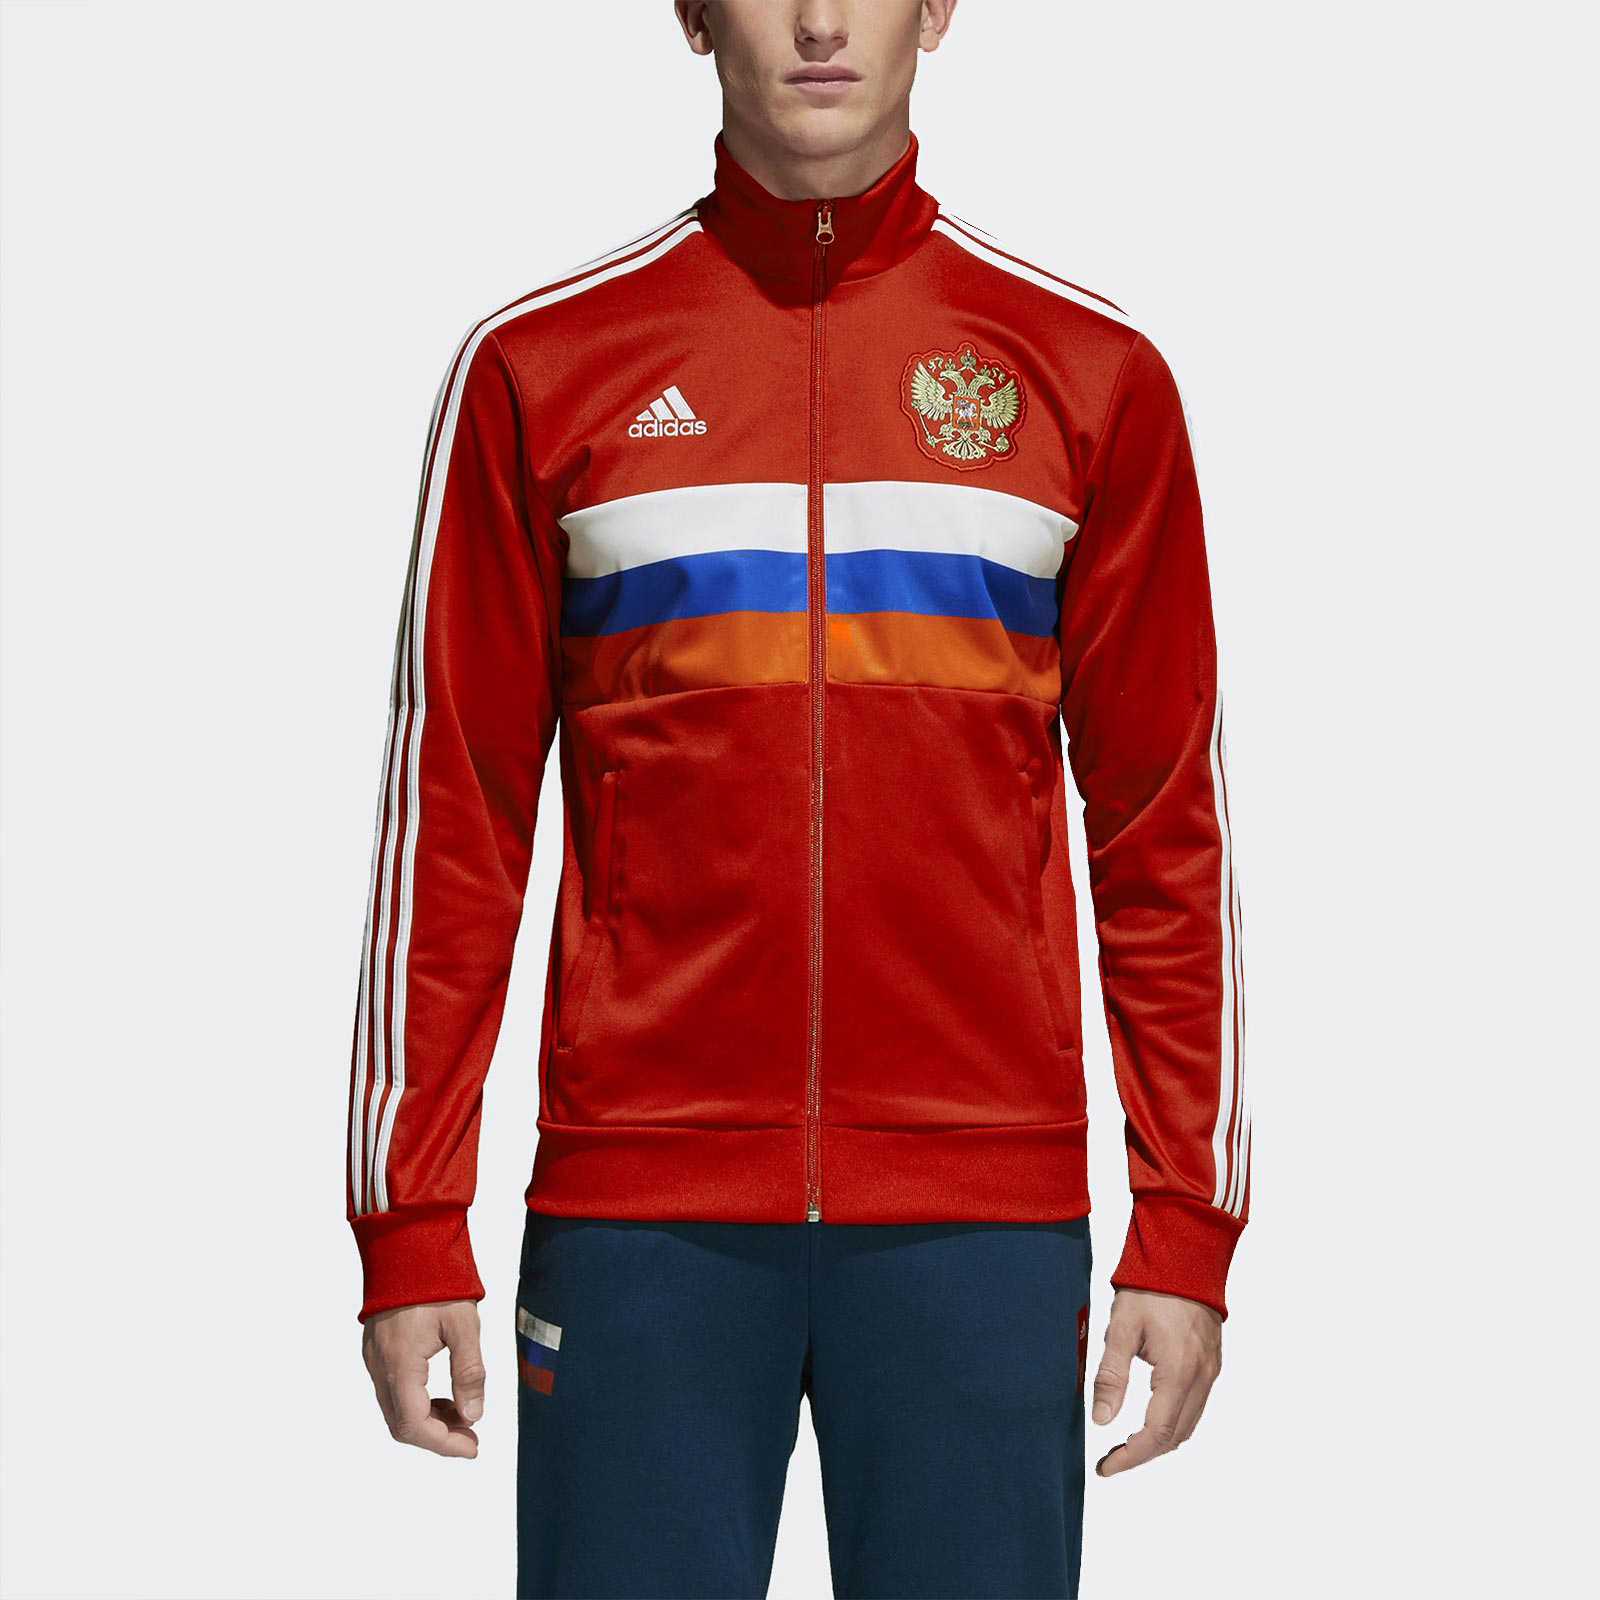 Сайт адидас россия. Adidas / олимпийка RFU 3s Trk Top Red. Адидас красная олимпийка adidas. Олимпийка раша адидас. Олимпийка RFU 3s Trk Top Red.